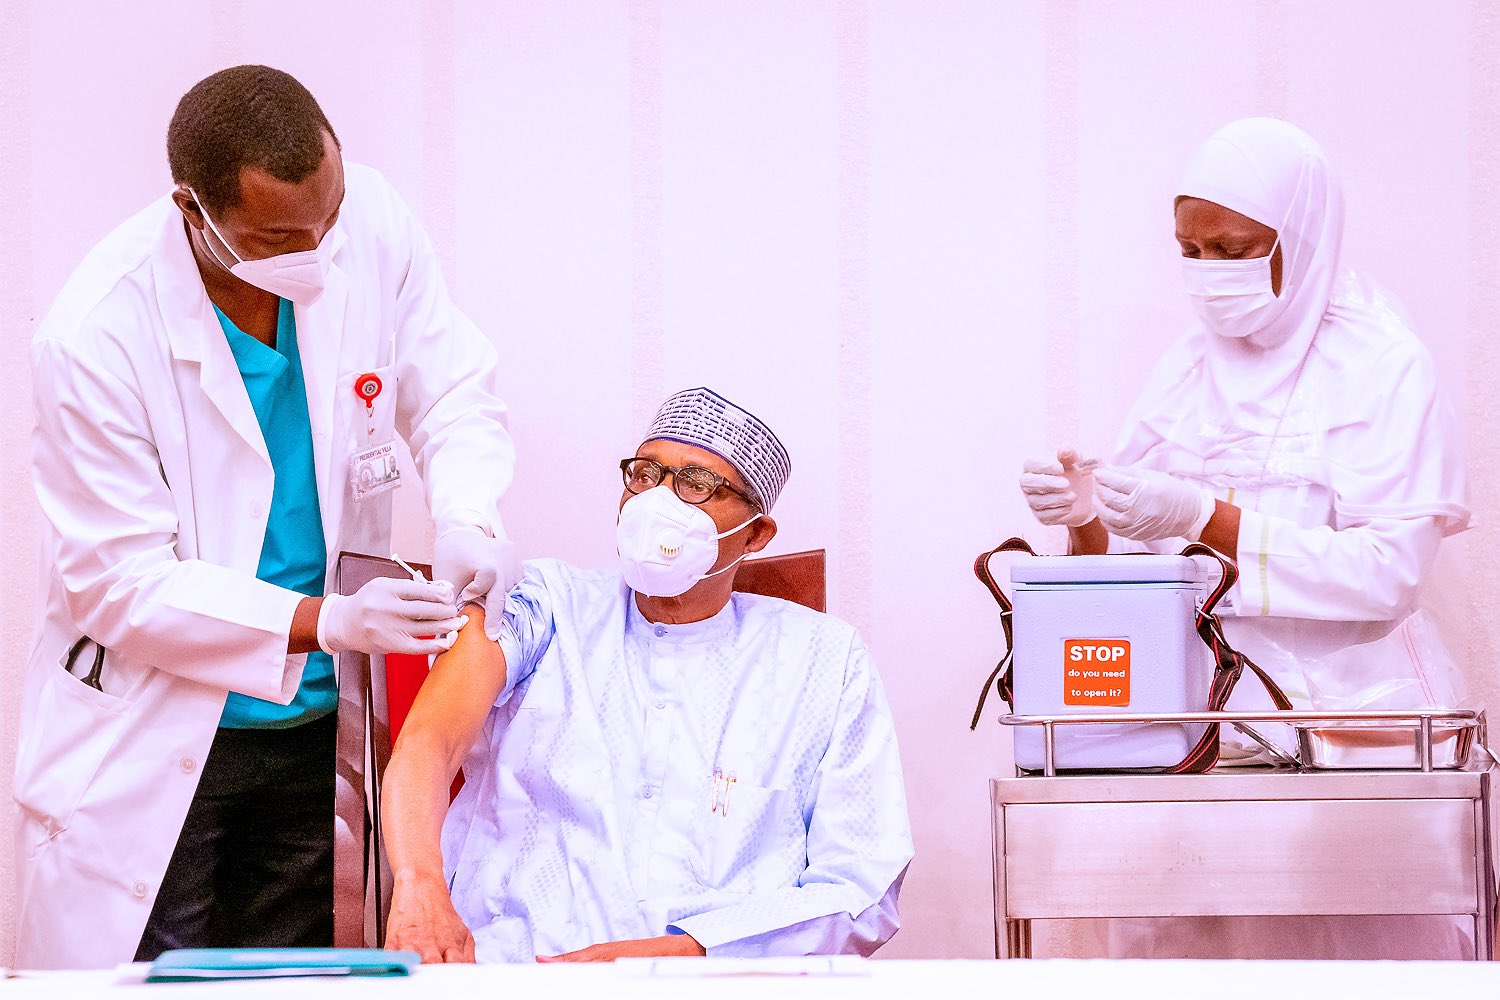 Buhari receives COVID-19 vaccine